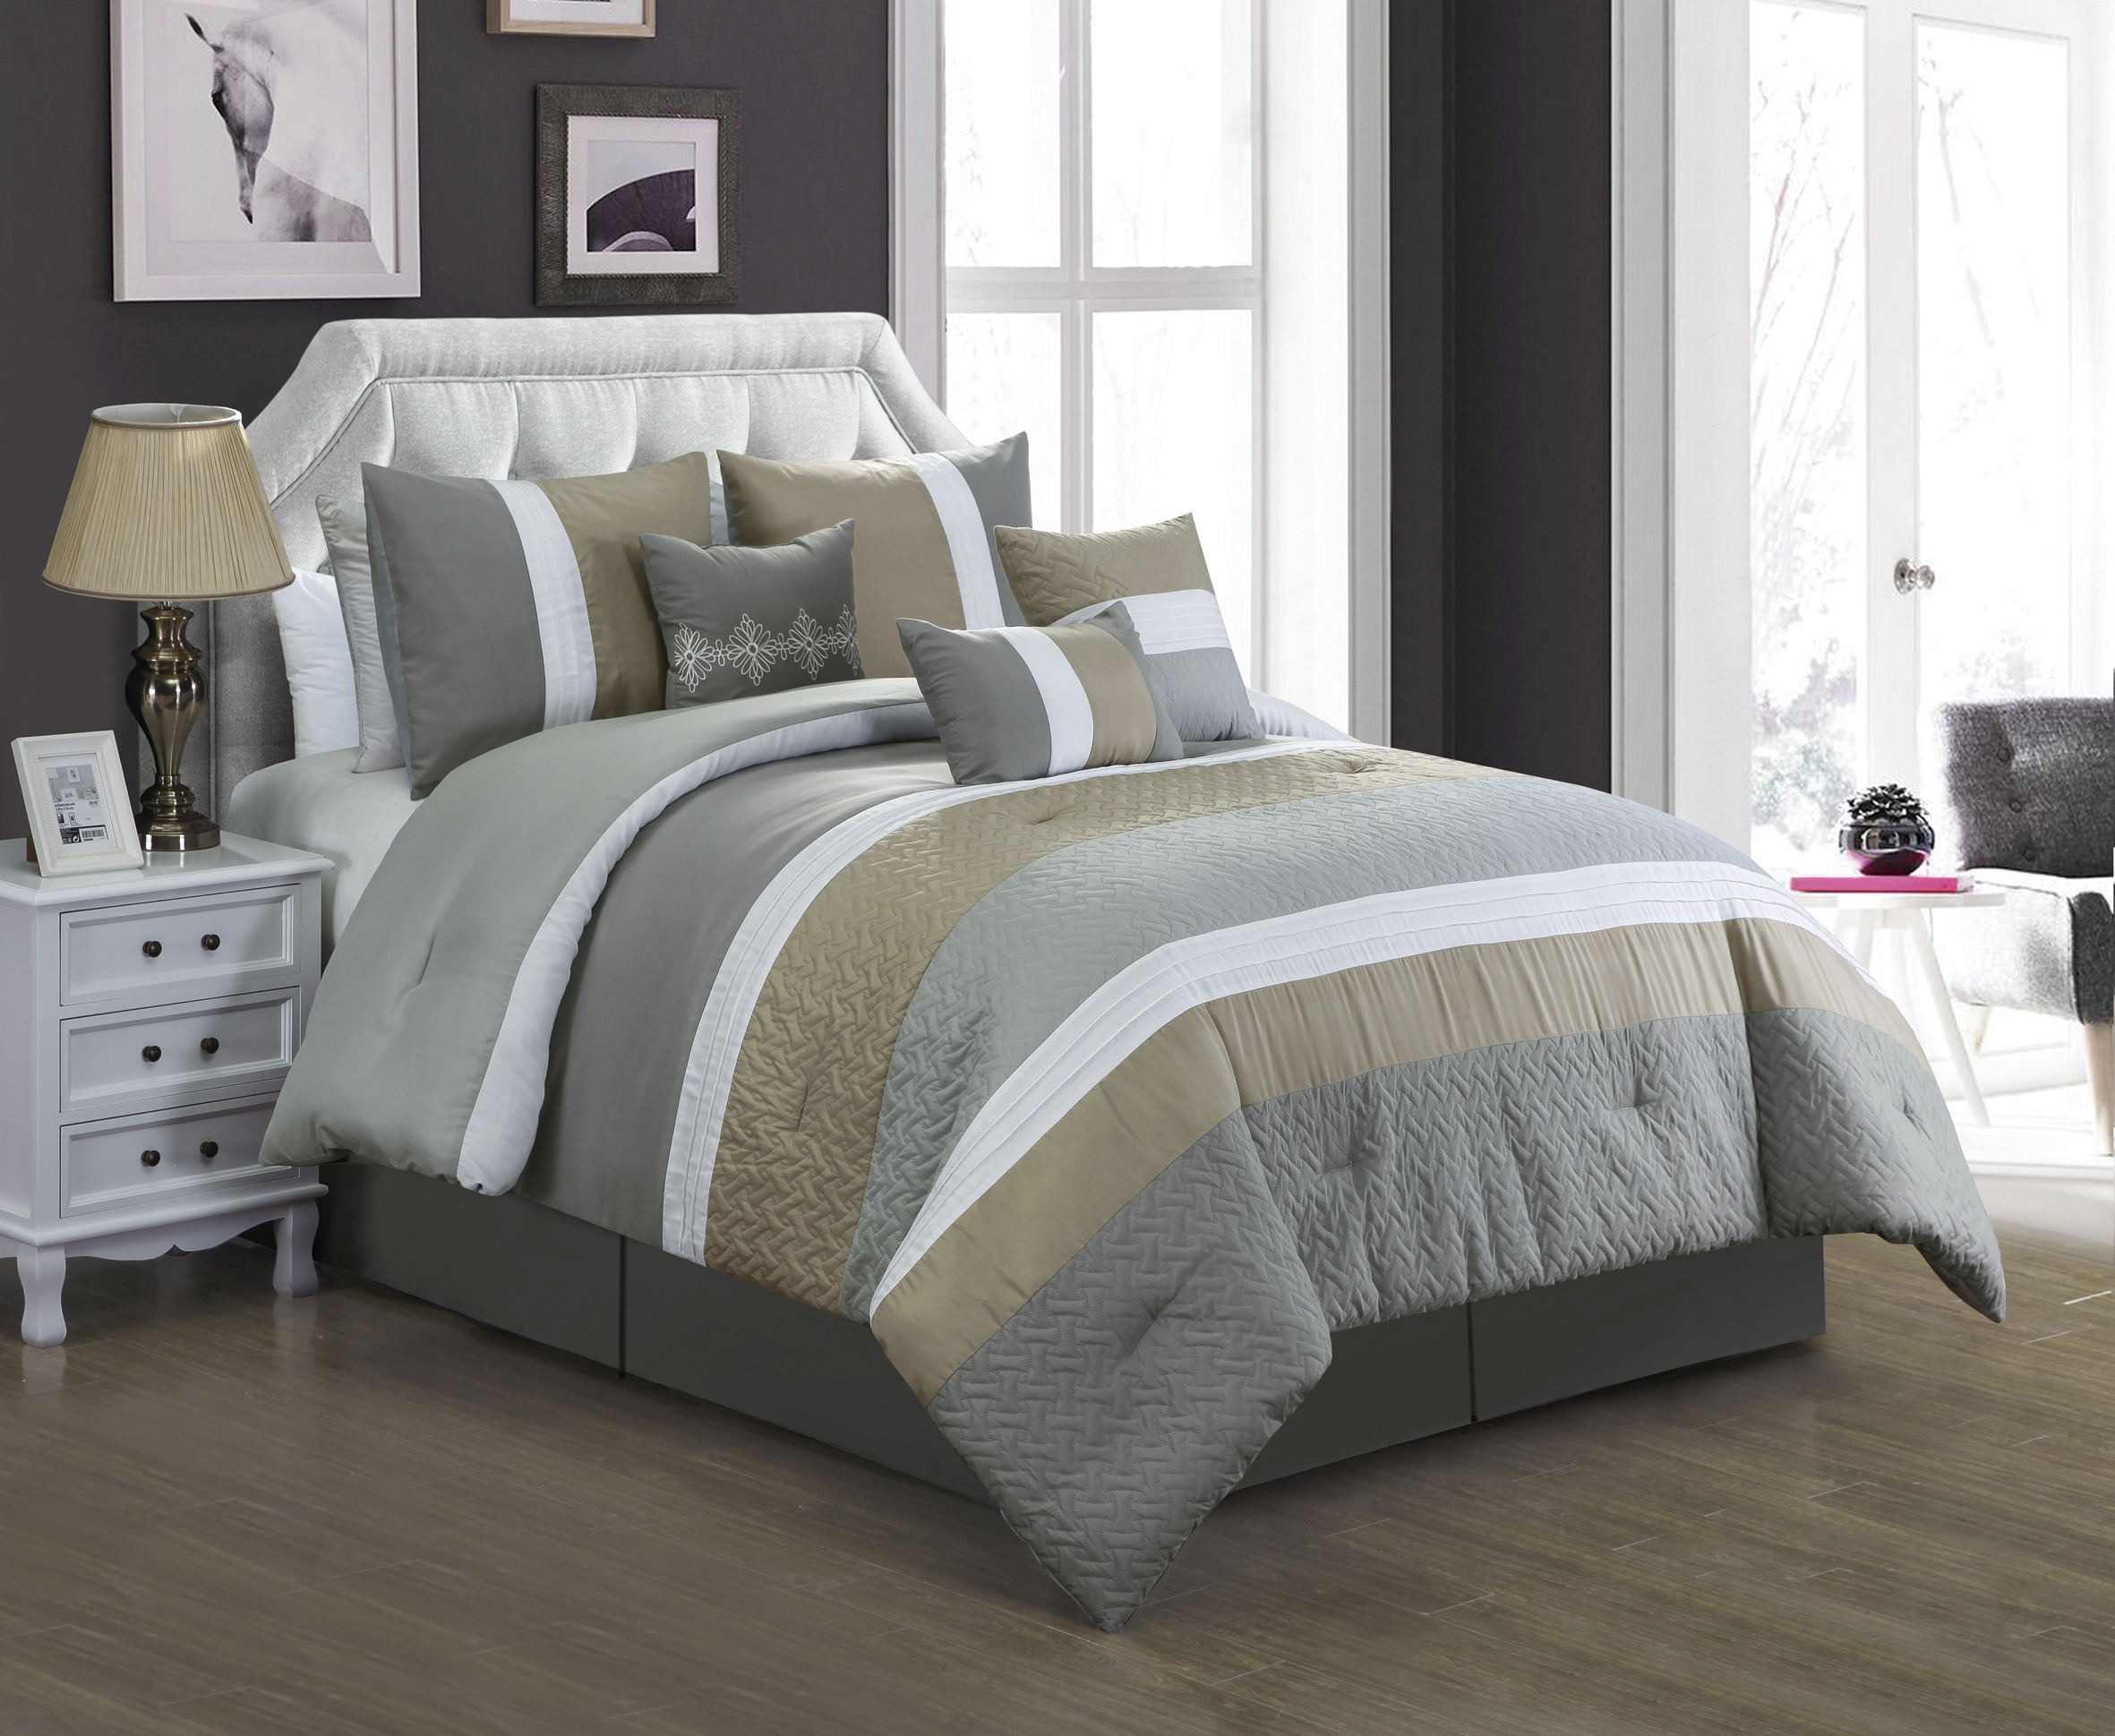 Hgmart Bedding Comforter Set Bed In, Oversized Comforters For King Size Beds